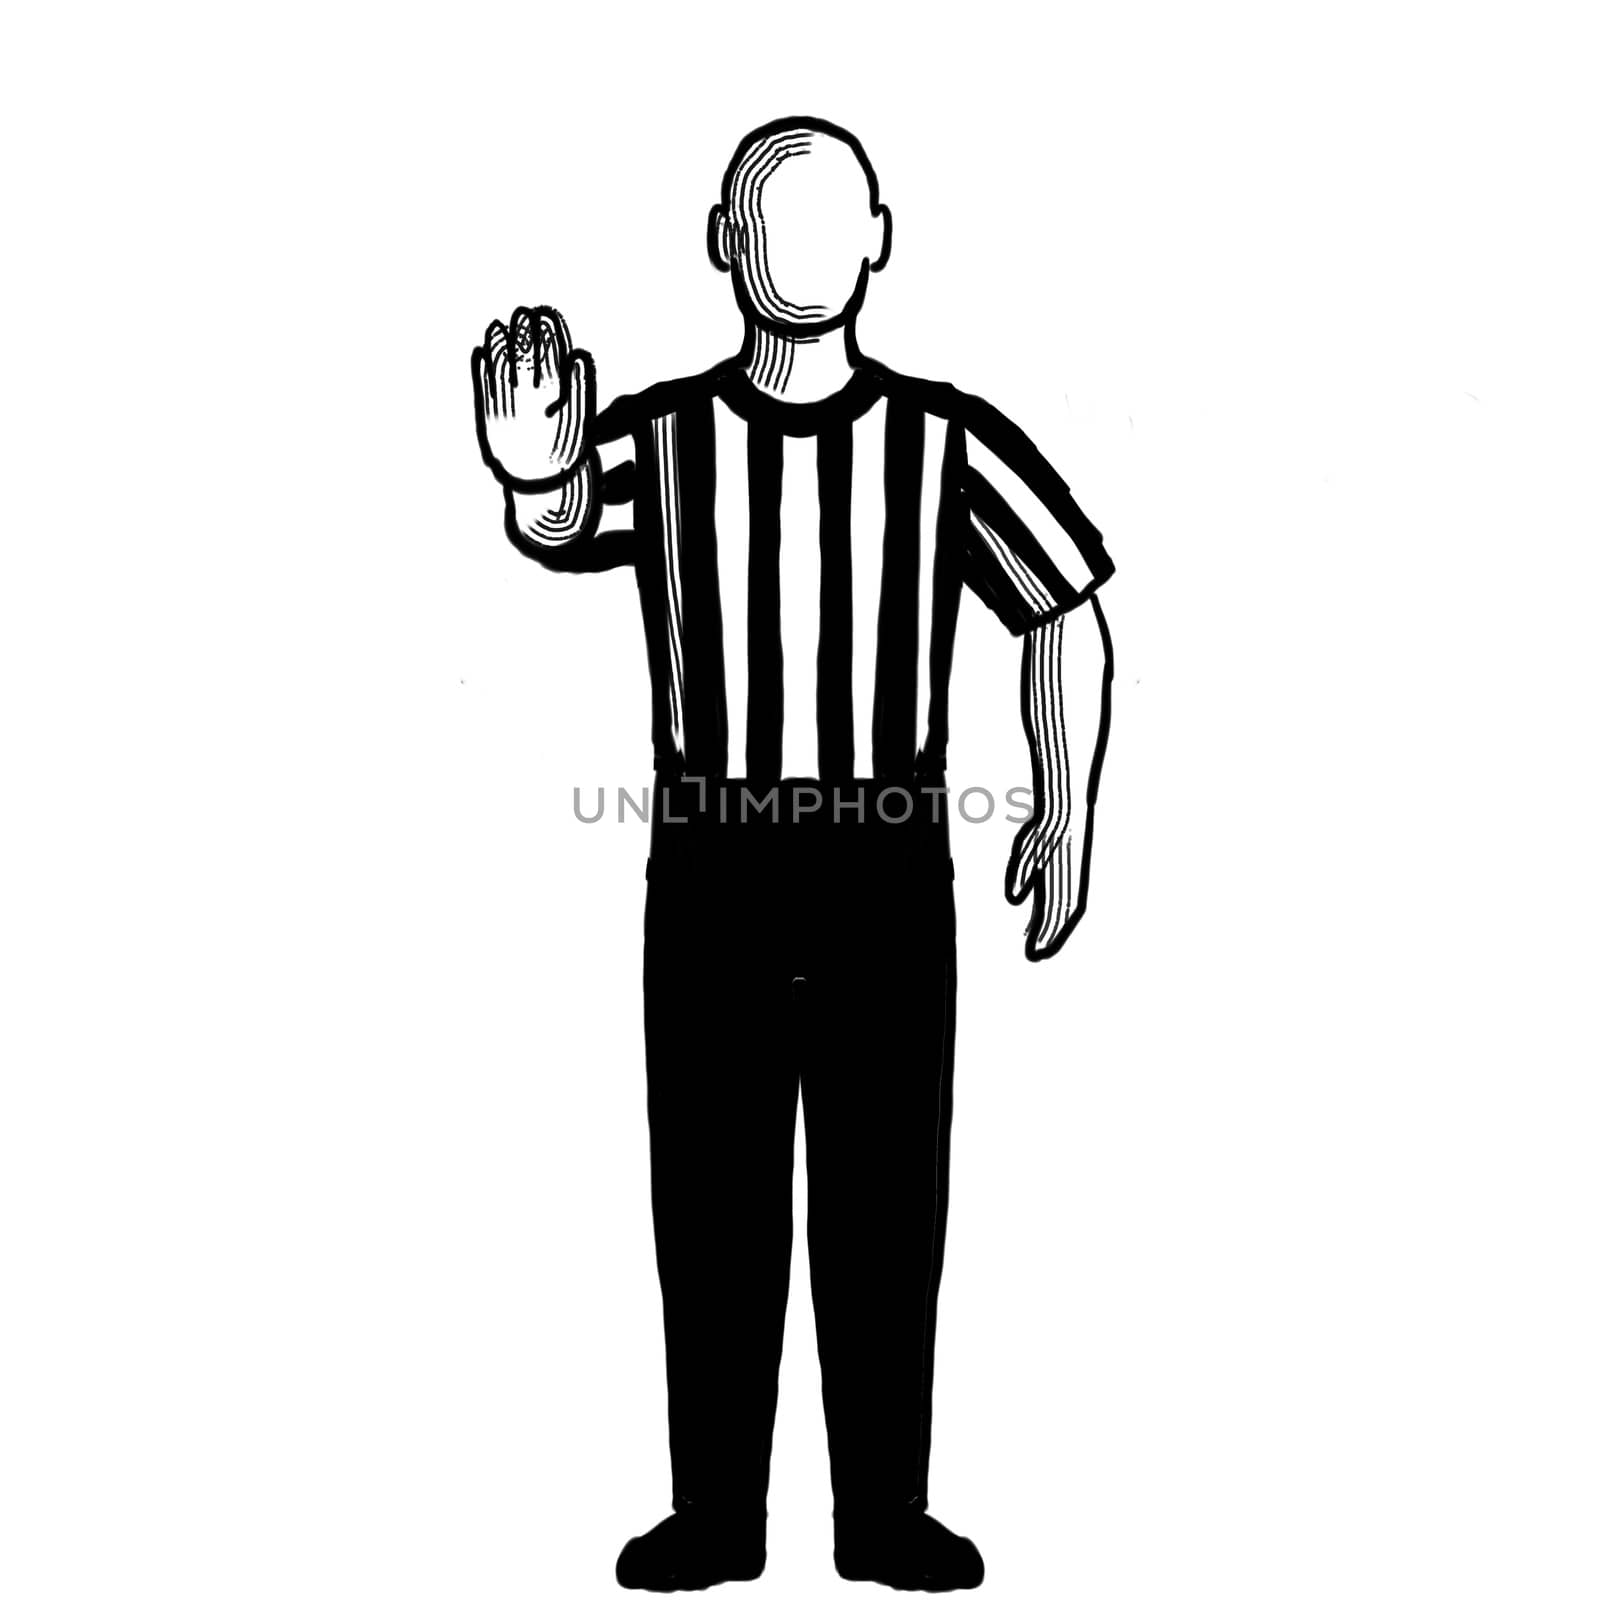 Basketball Referee directional signal  Hand Signal Retro Black and White by patrimonio